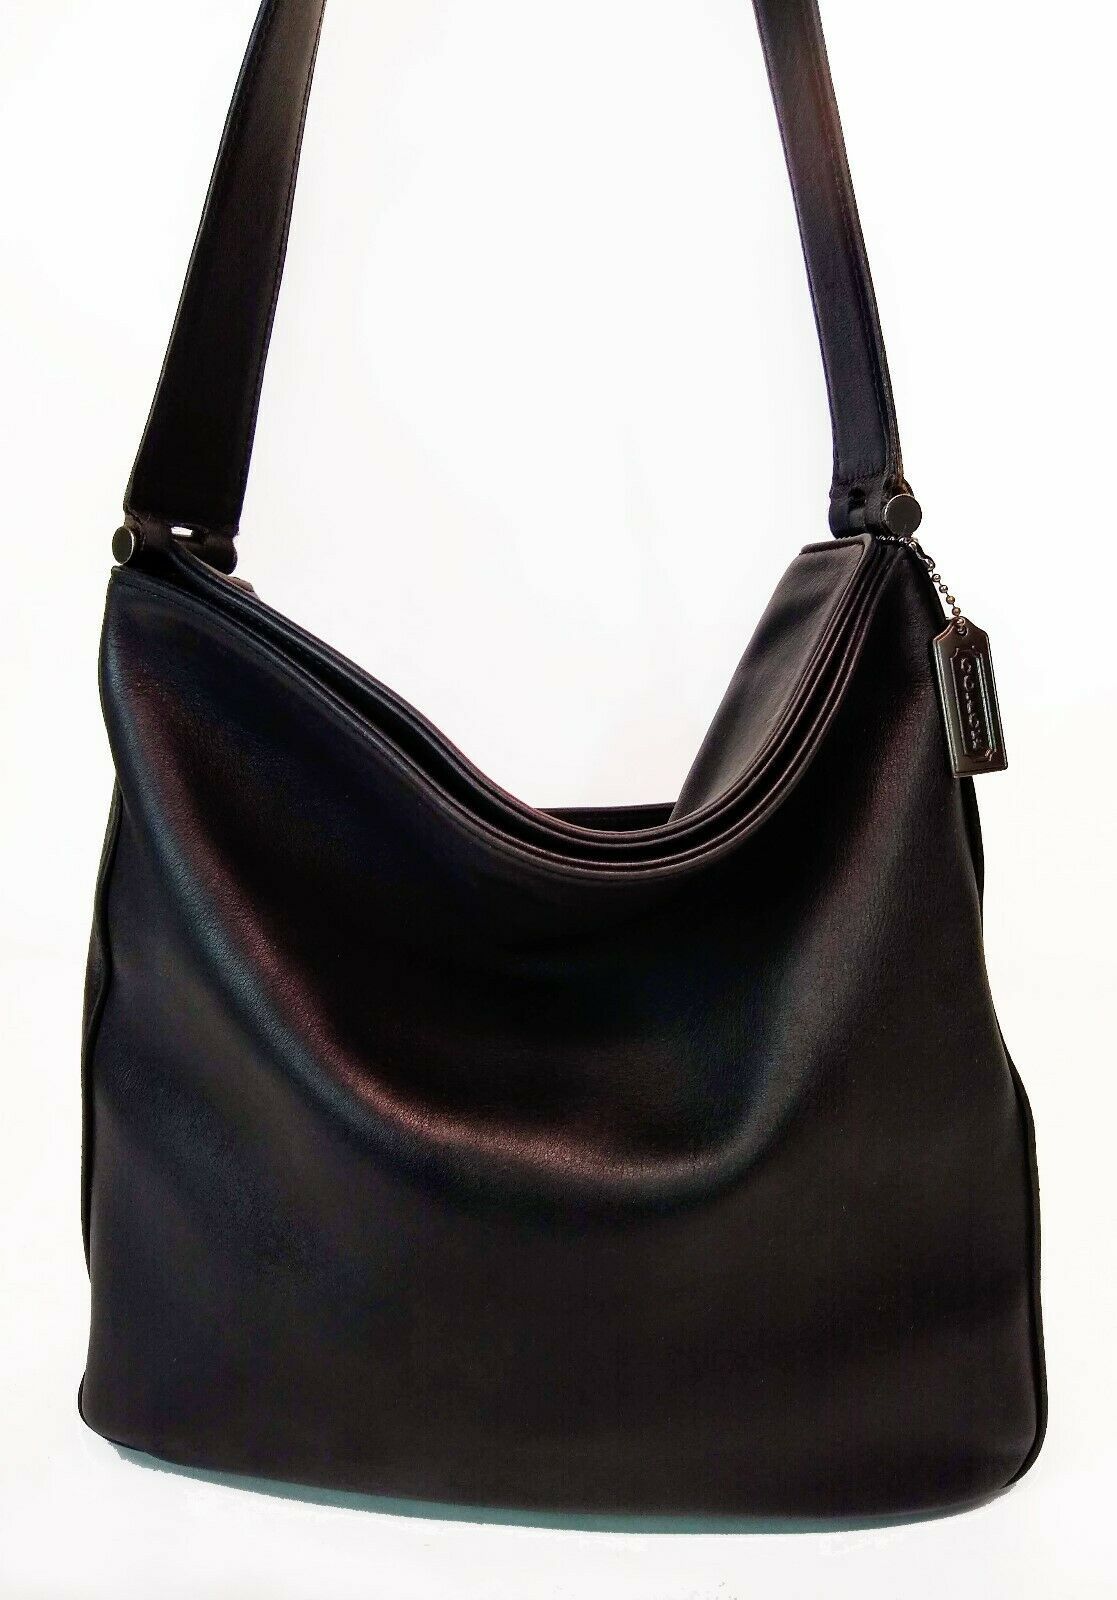 Vintage Coach Legacy Black Leather Slouch Hobo Shoulder Bag Purse 9180, USA Made - Women's